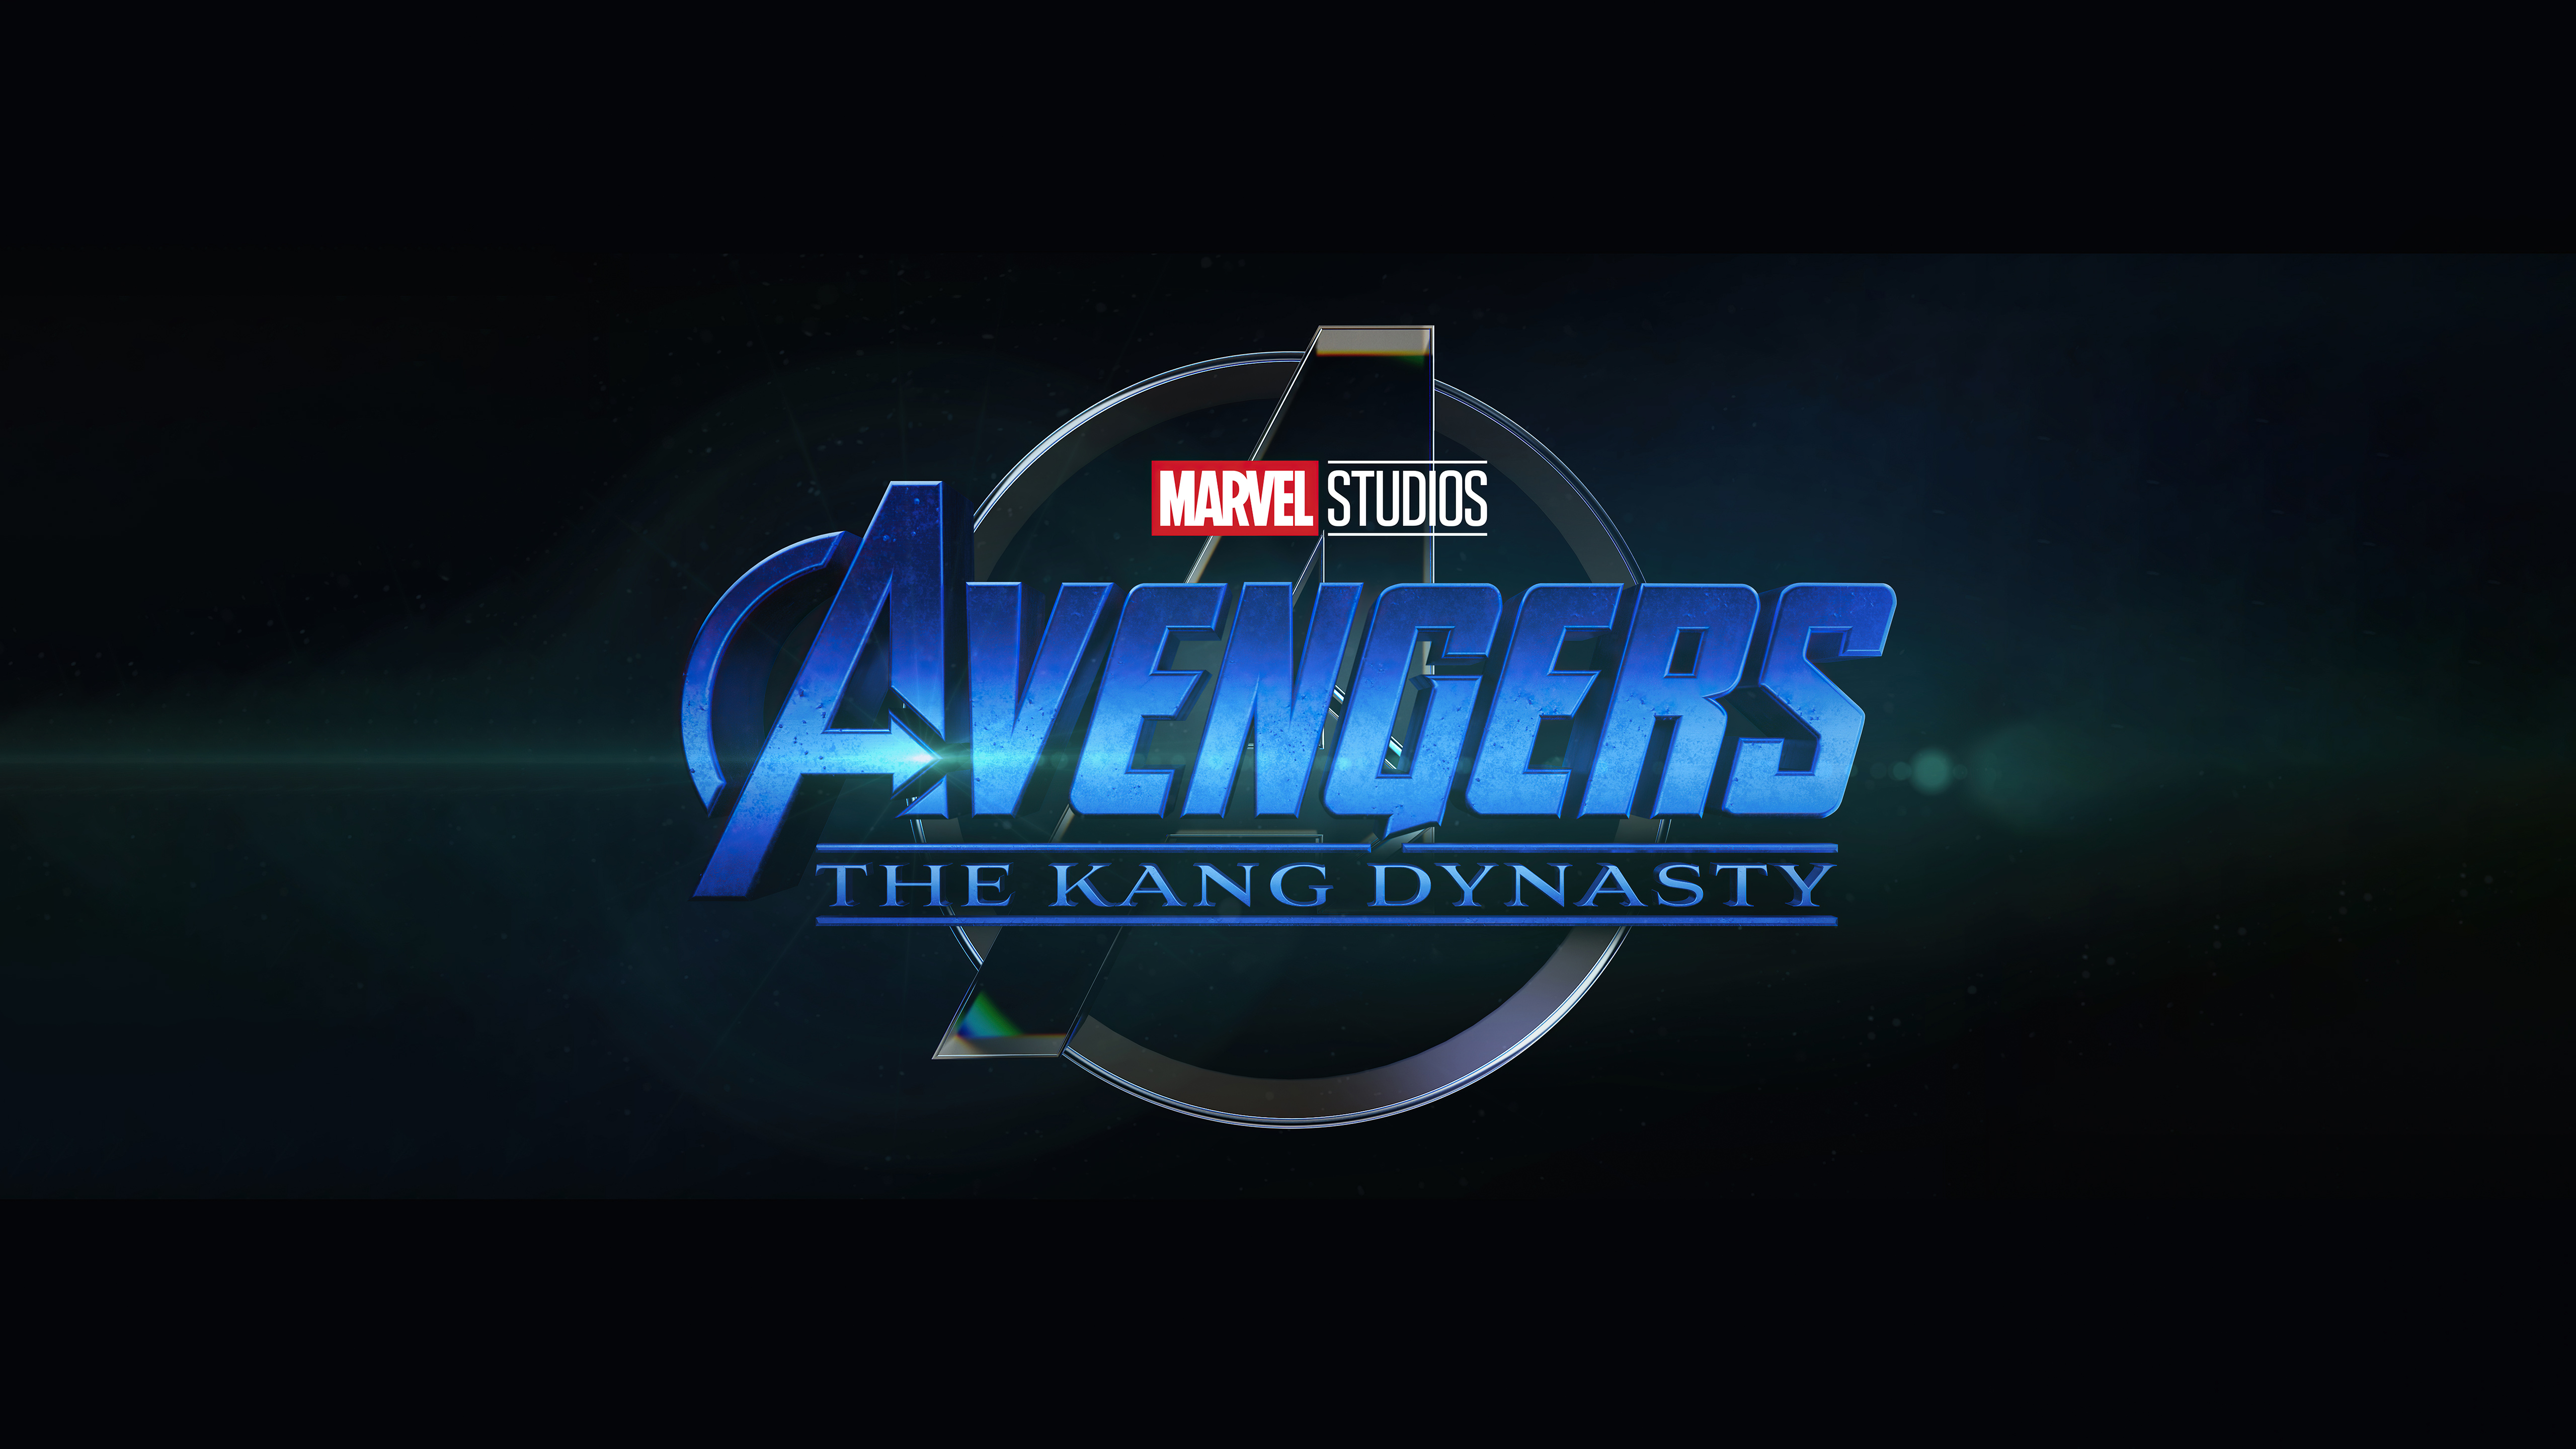 Фото marvel, фильмы, Avengers The Kang Dynasty, 2025 Movies - бесплатные картинки на Fonwall